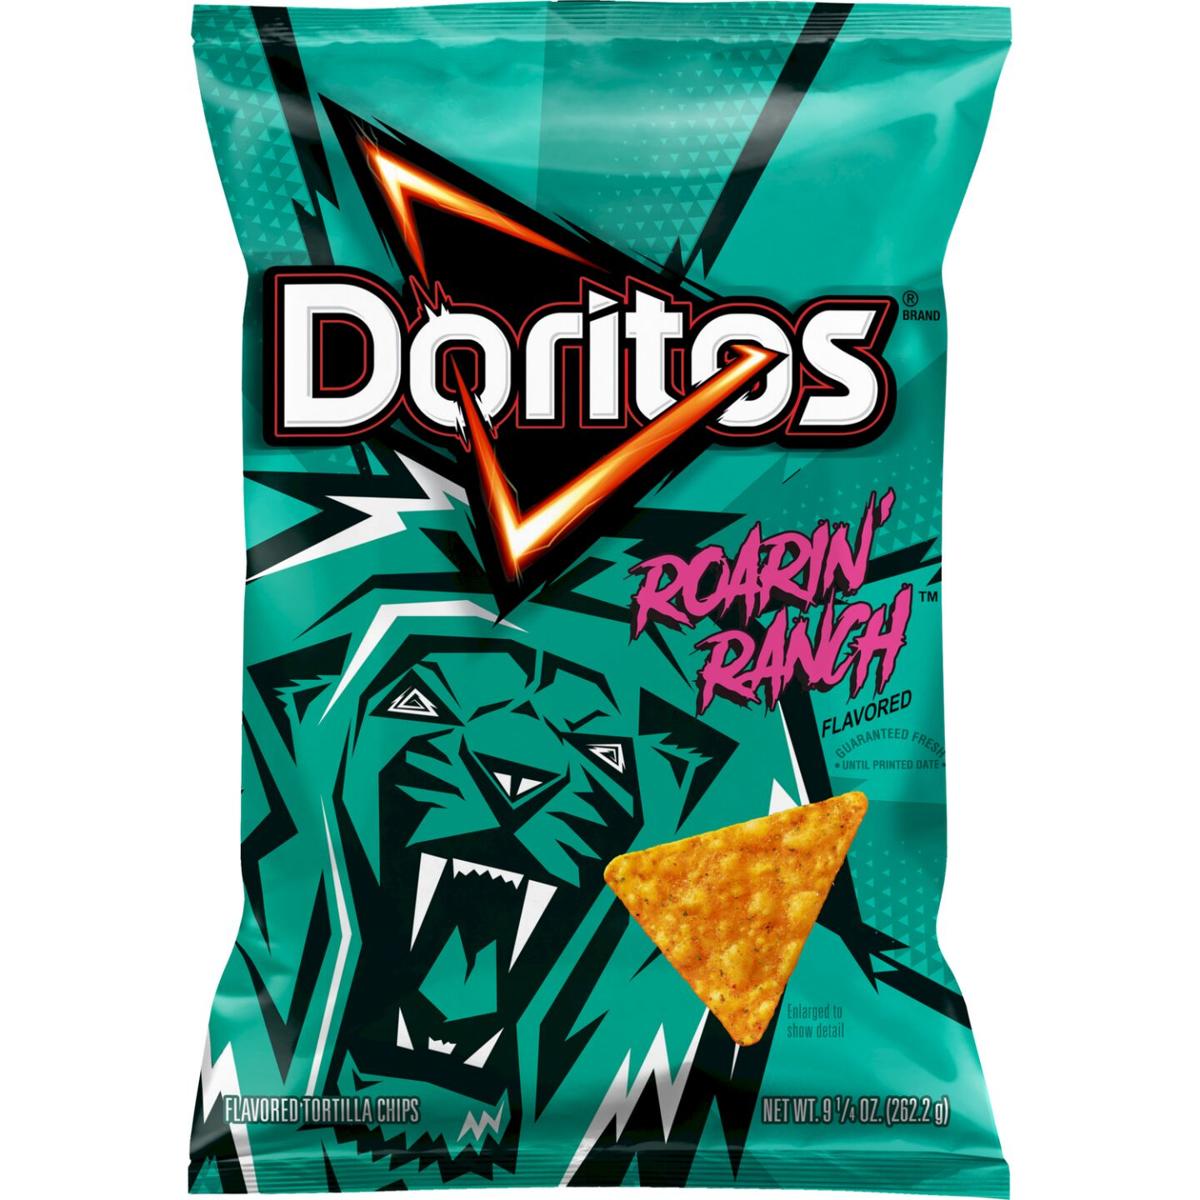 Review: Roarin' Ranch Doritos flavor, sold at Food Lion